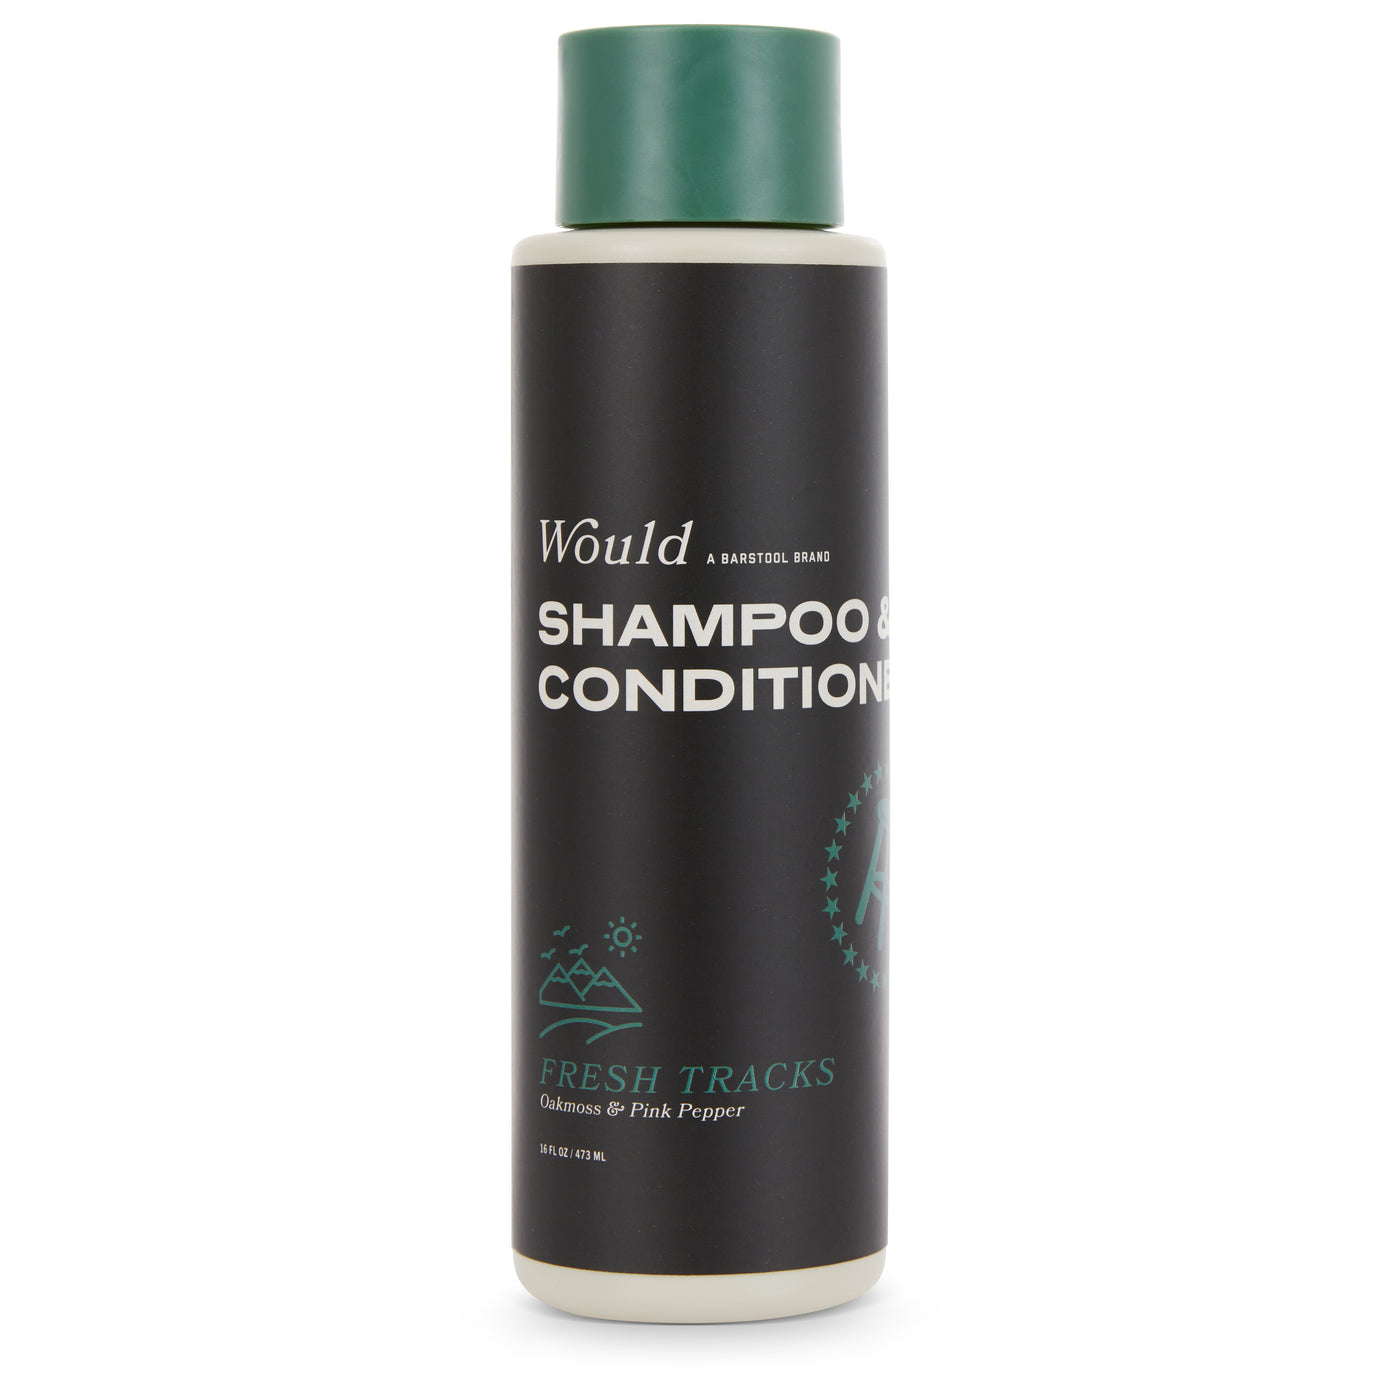 Shampoo + Conditioner